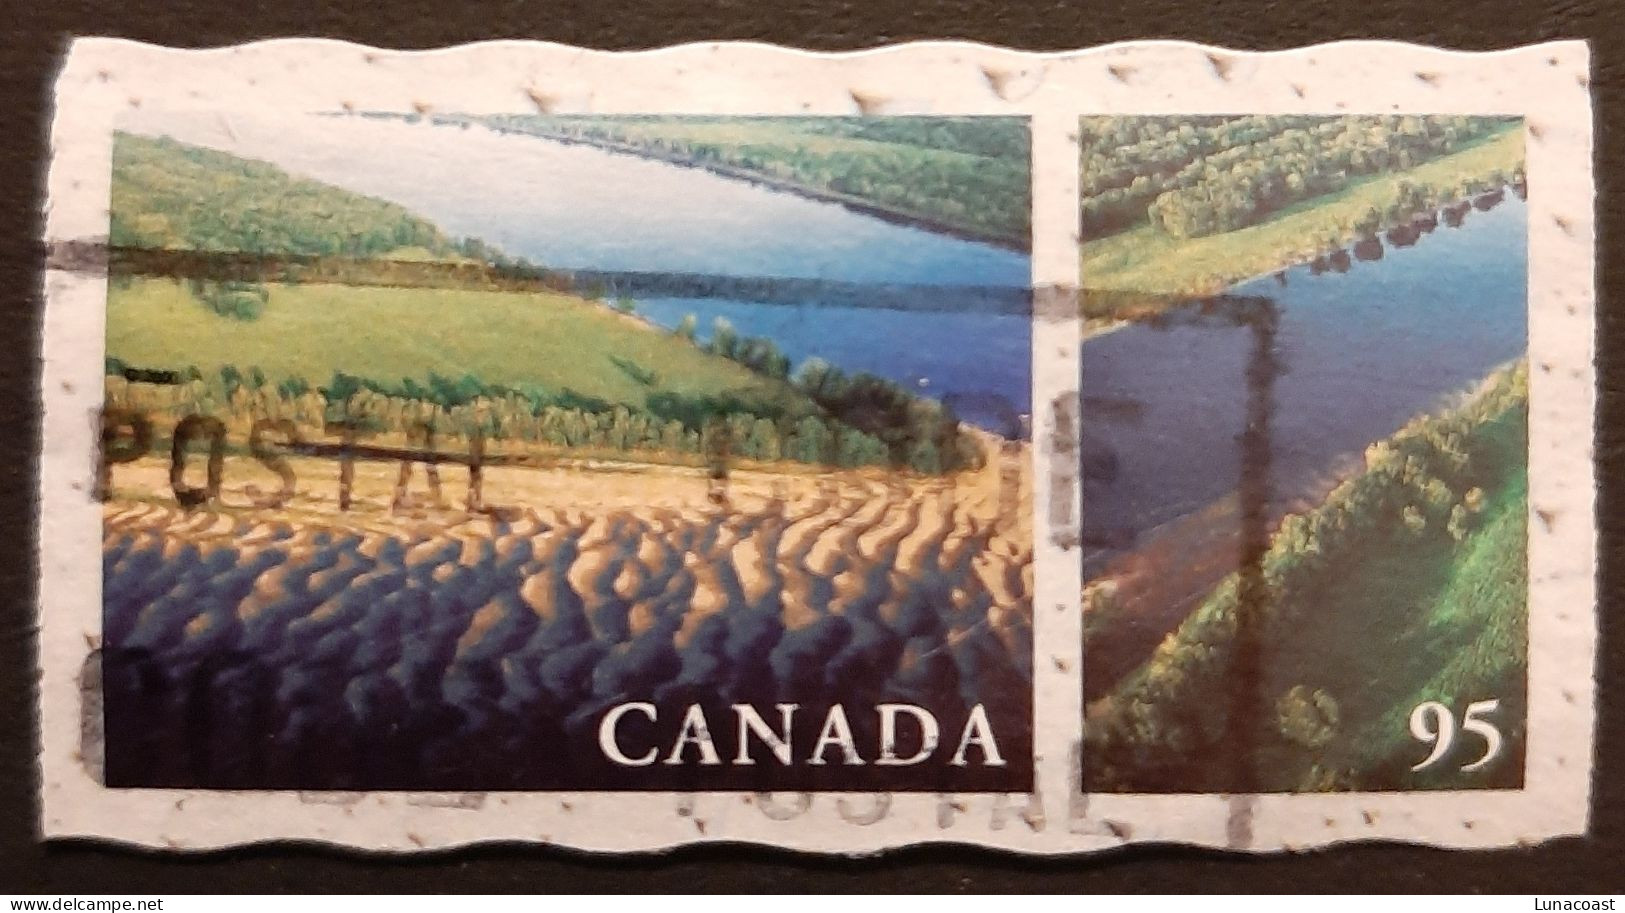 Canada 2003  USED  Sc1855c   95c  Fresh Waters, Saint John River - Gebraucht